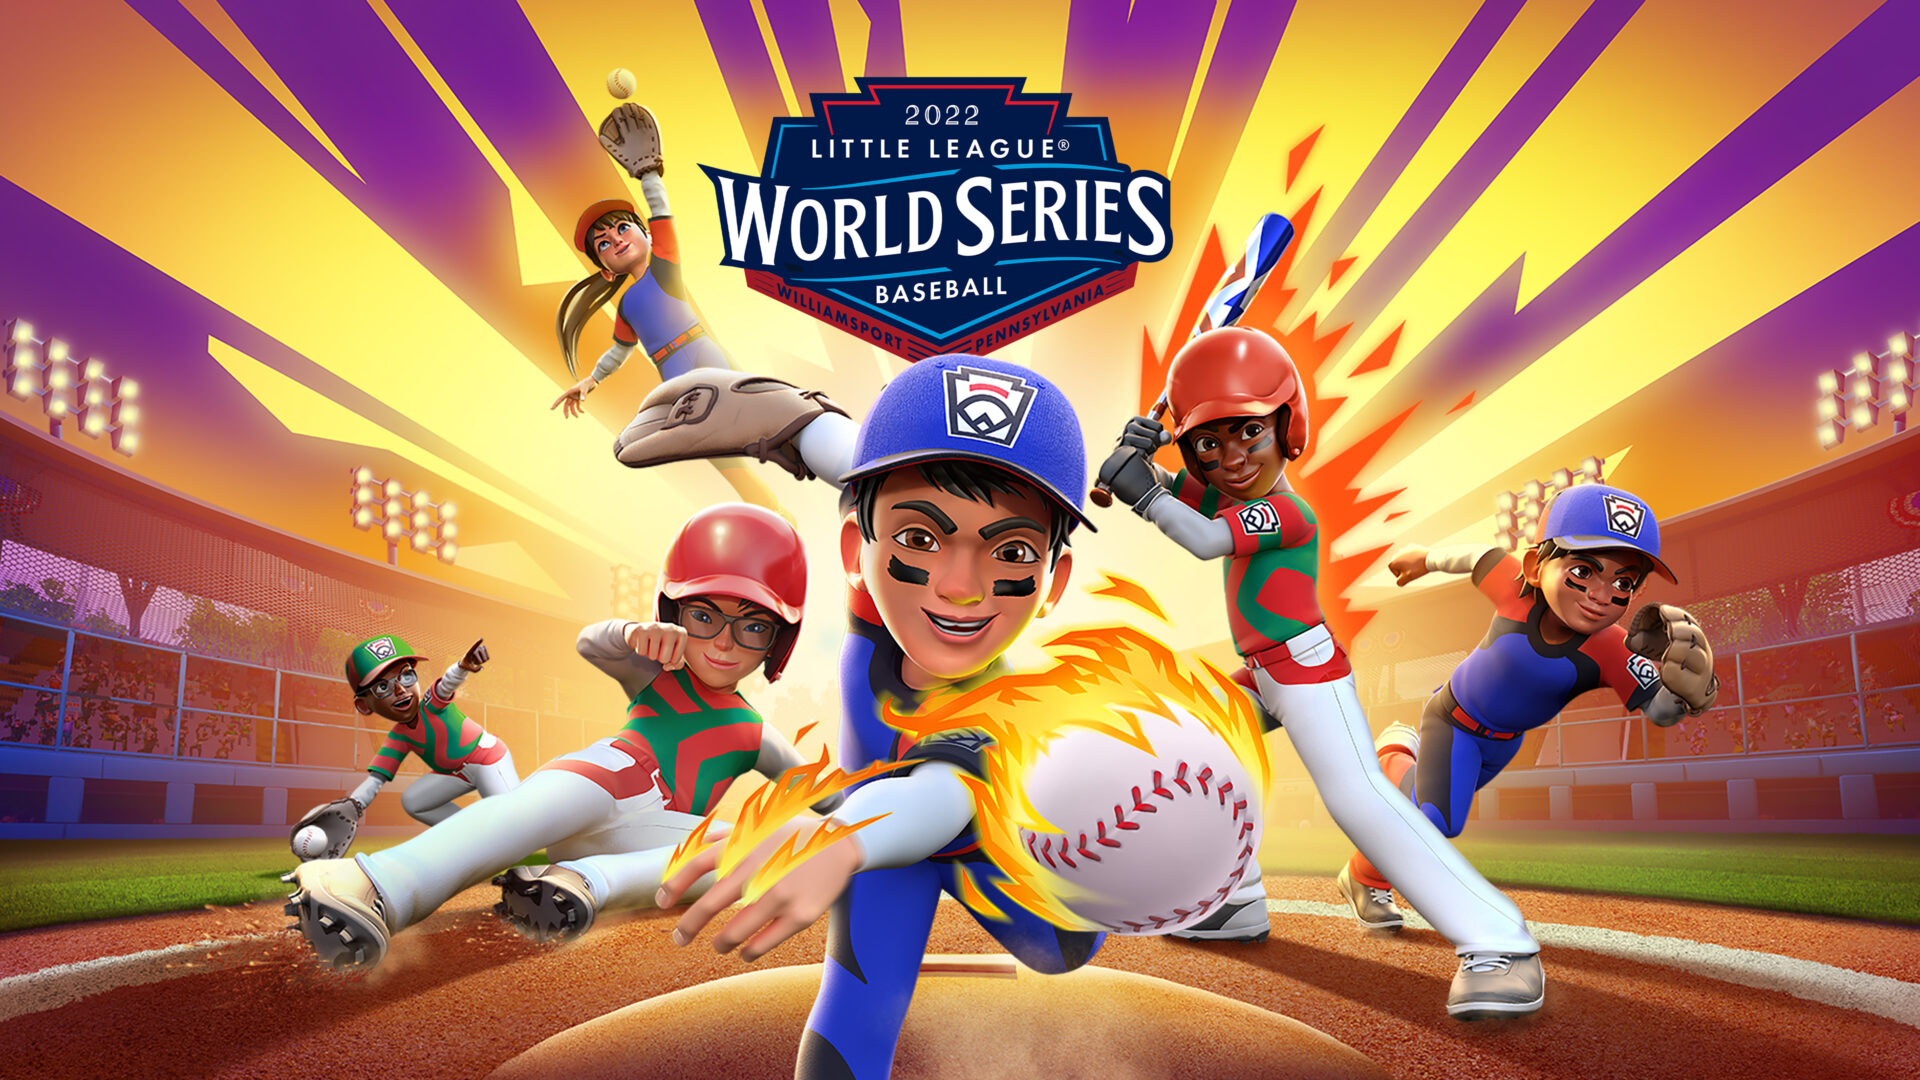 Little League World Series Baseball 2022 announced for PS5, Xbox Series